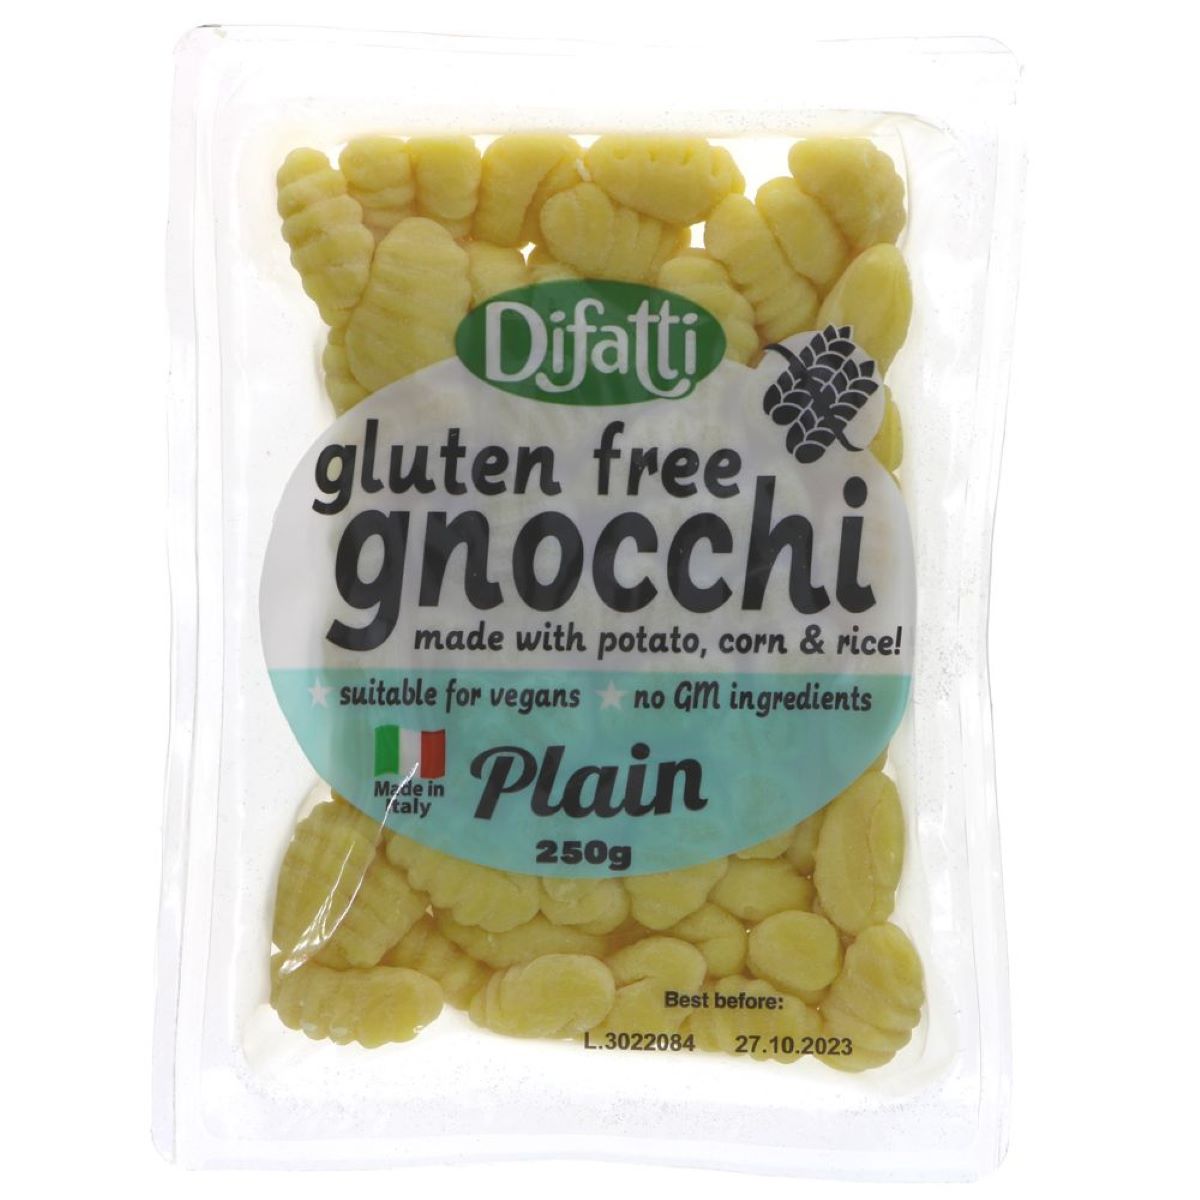 Difatti Gluten Free Gnocchi 250g